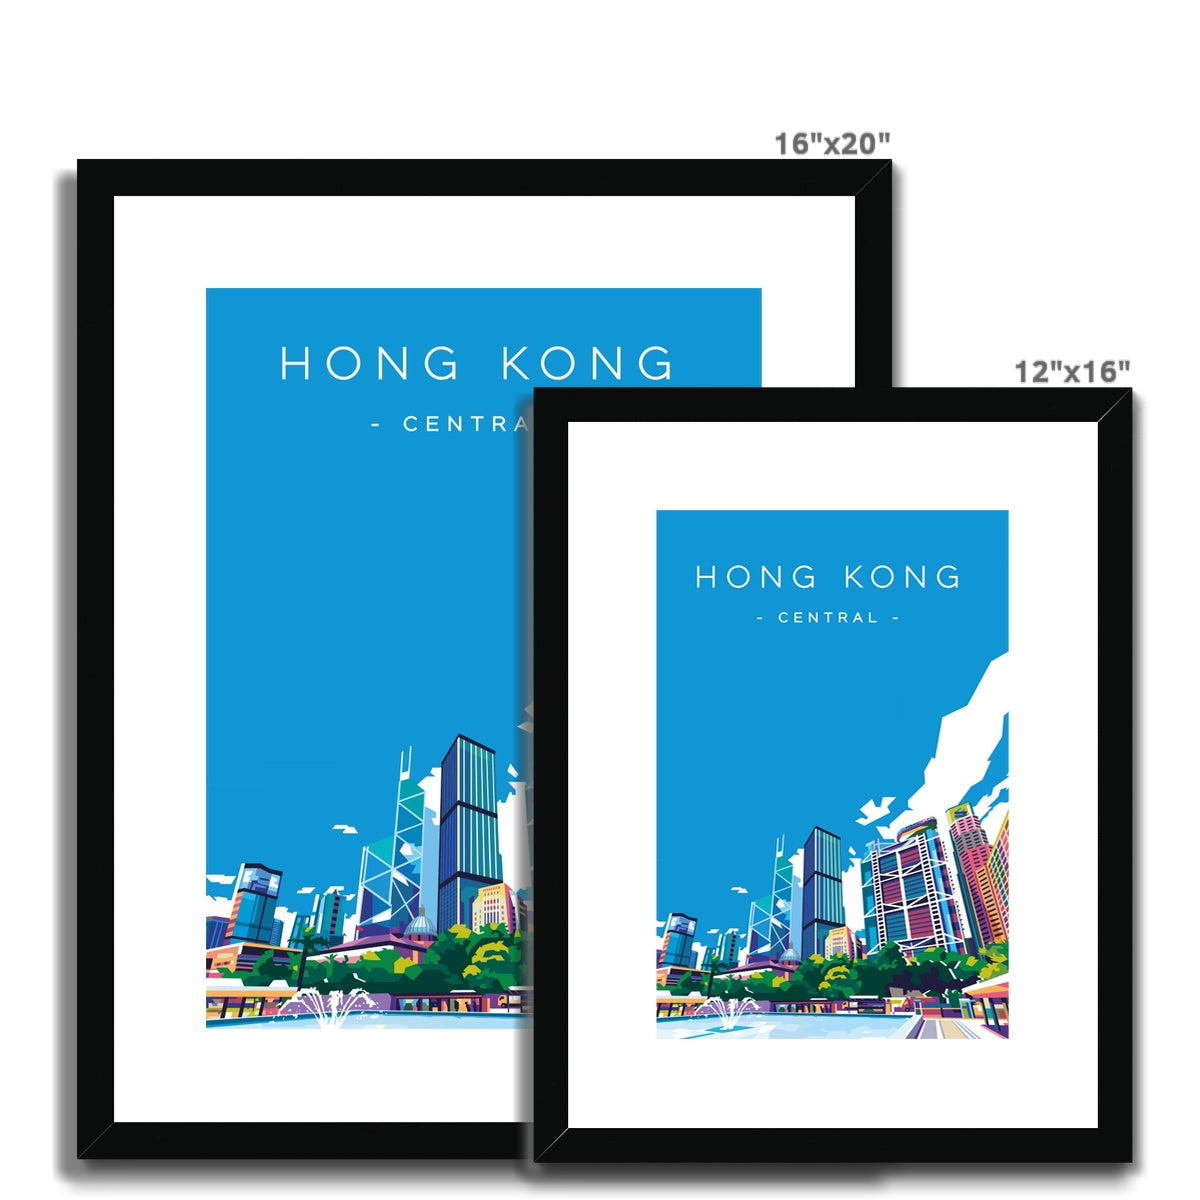 Hong Kong Travel - Central Framed & Mounted Print